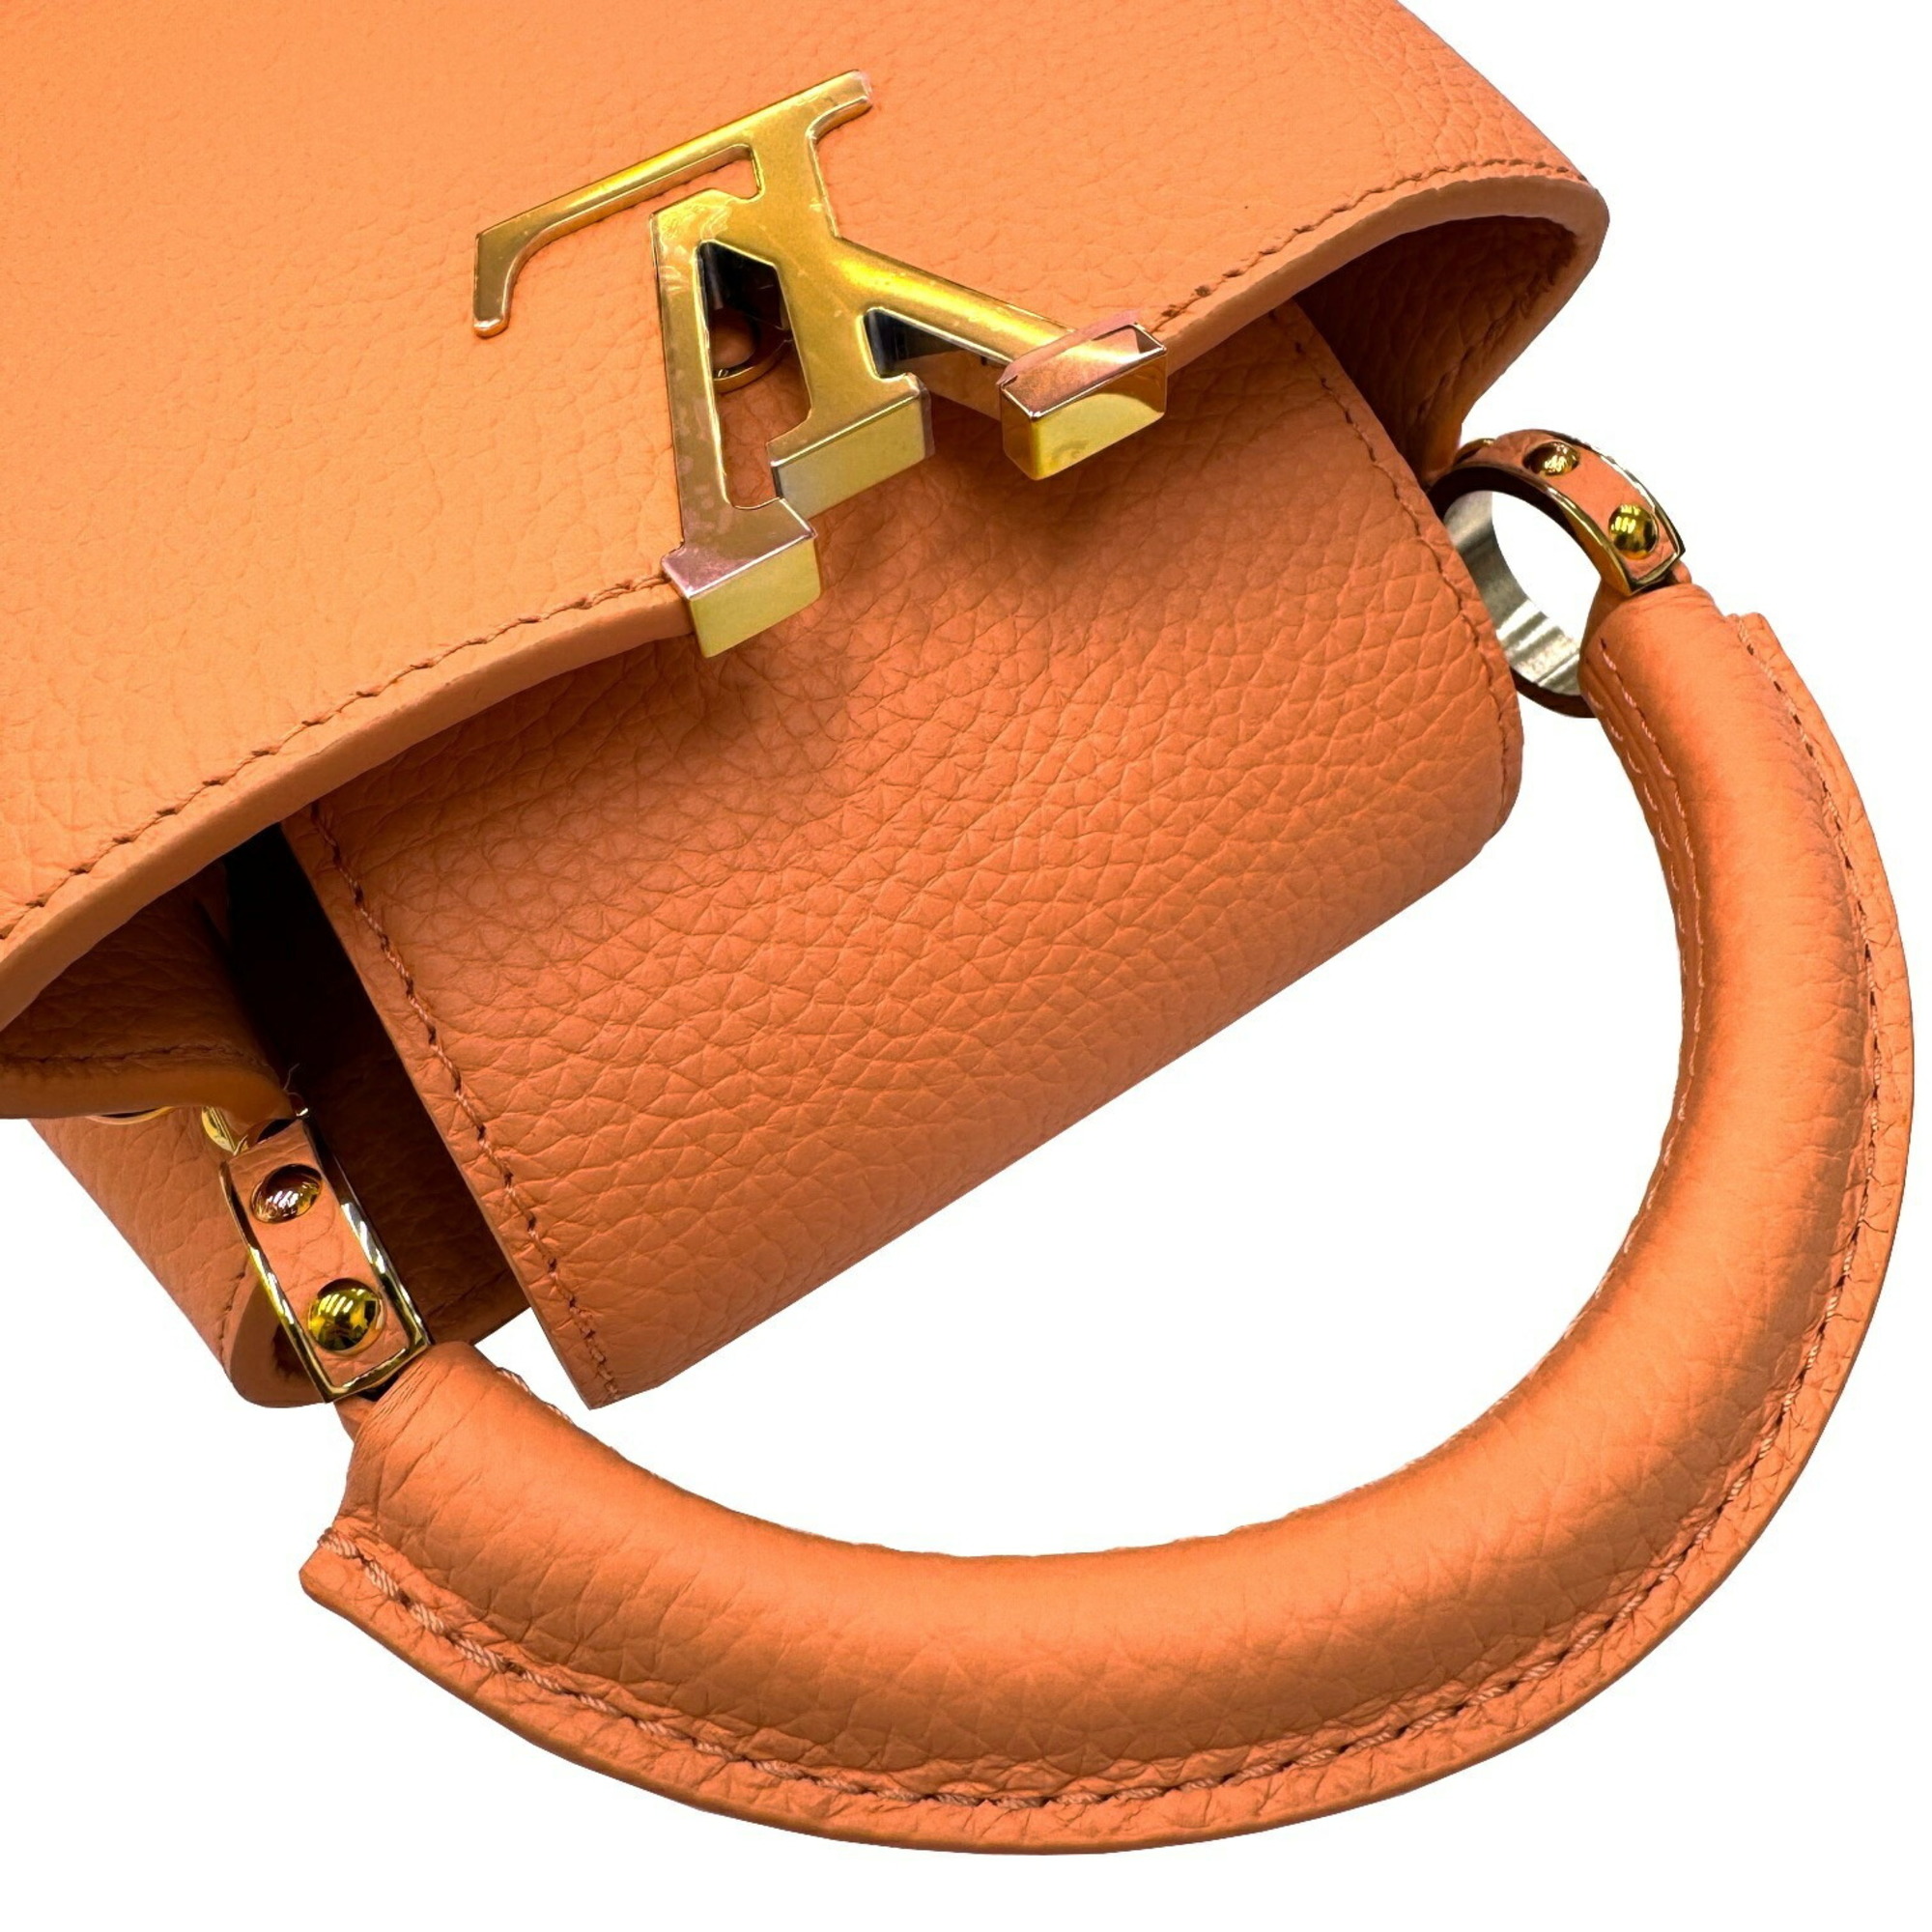 LOUIS VUITTON Capucines MINI M22606 RFID IC Chip Taurillon Leather Handbag Shoulder Bag Pink Orange Ladies